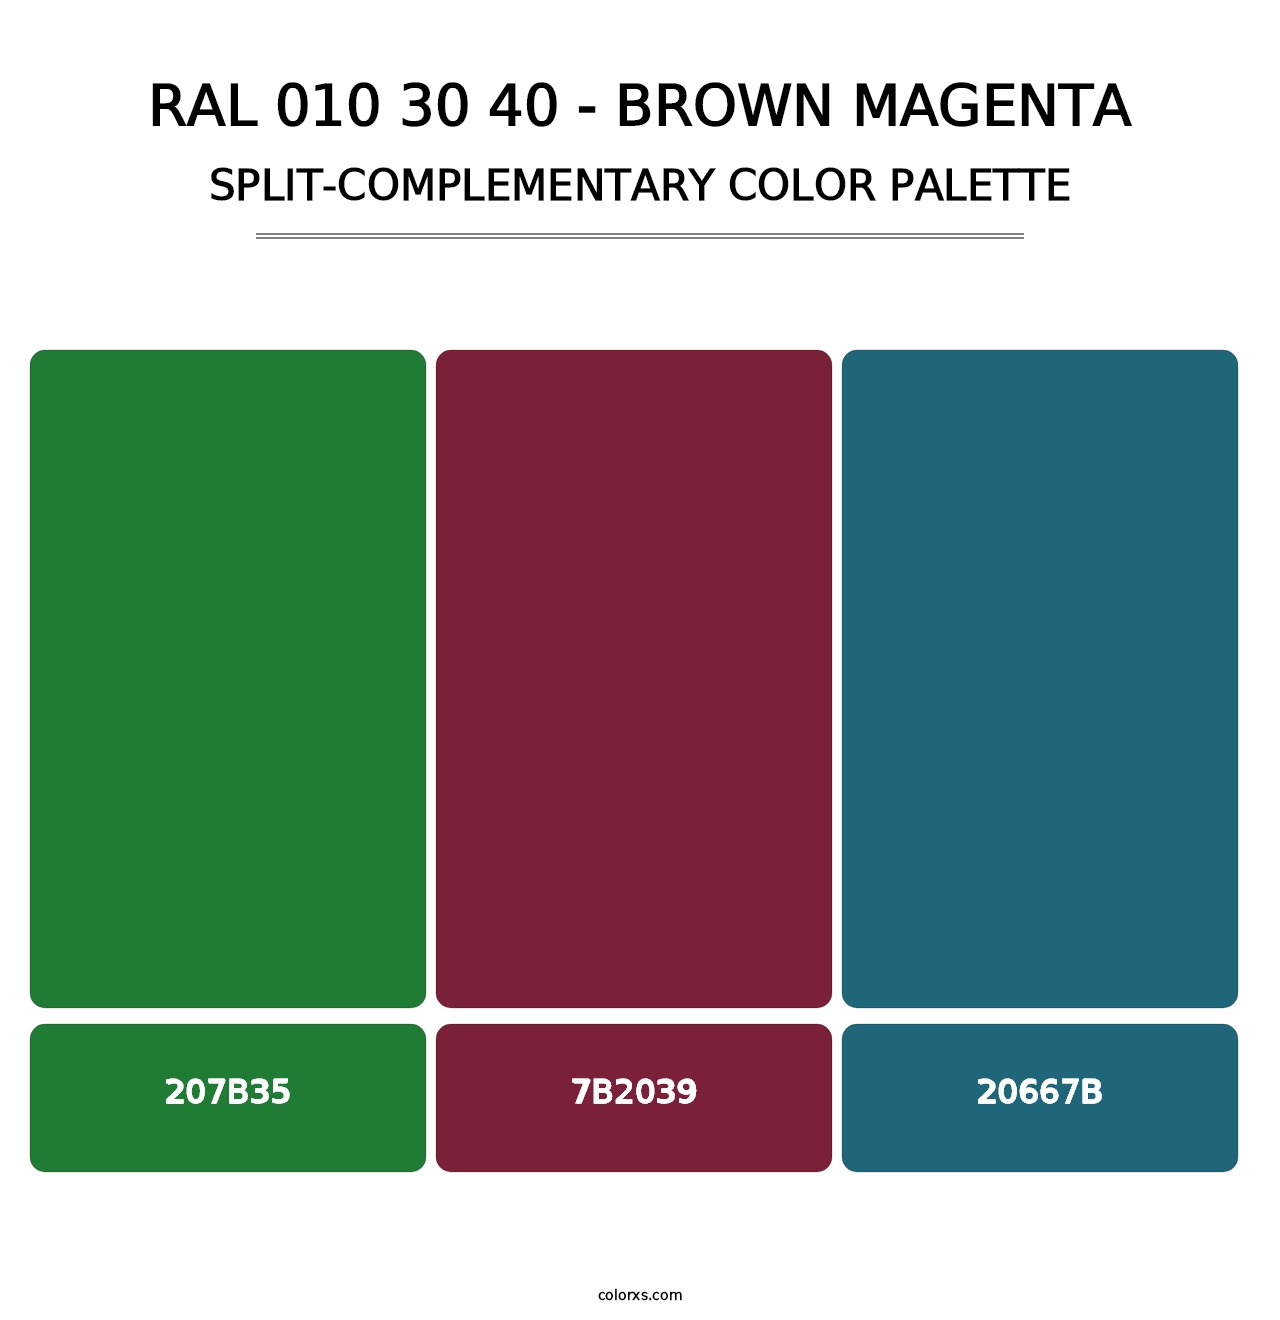 RAL 010 30 40 - Brown Magenta - Split-Complementary Color Palette